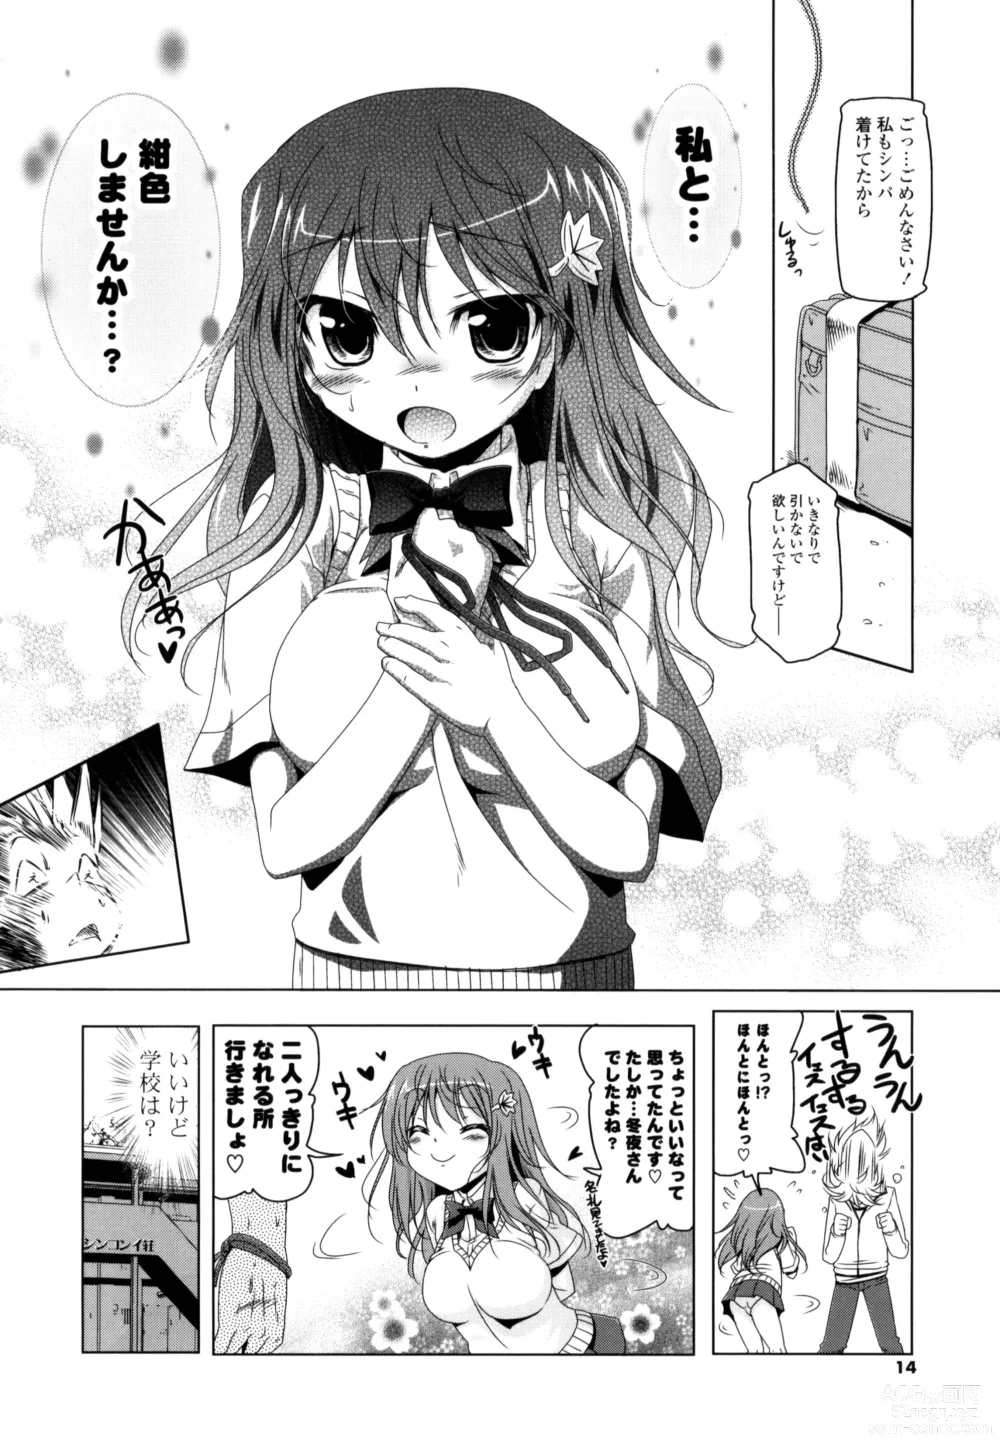 Page 12 of manga NAMA NAKA 100%!